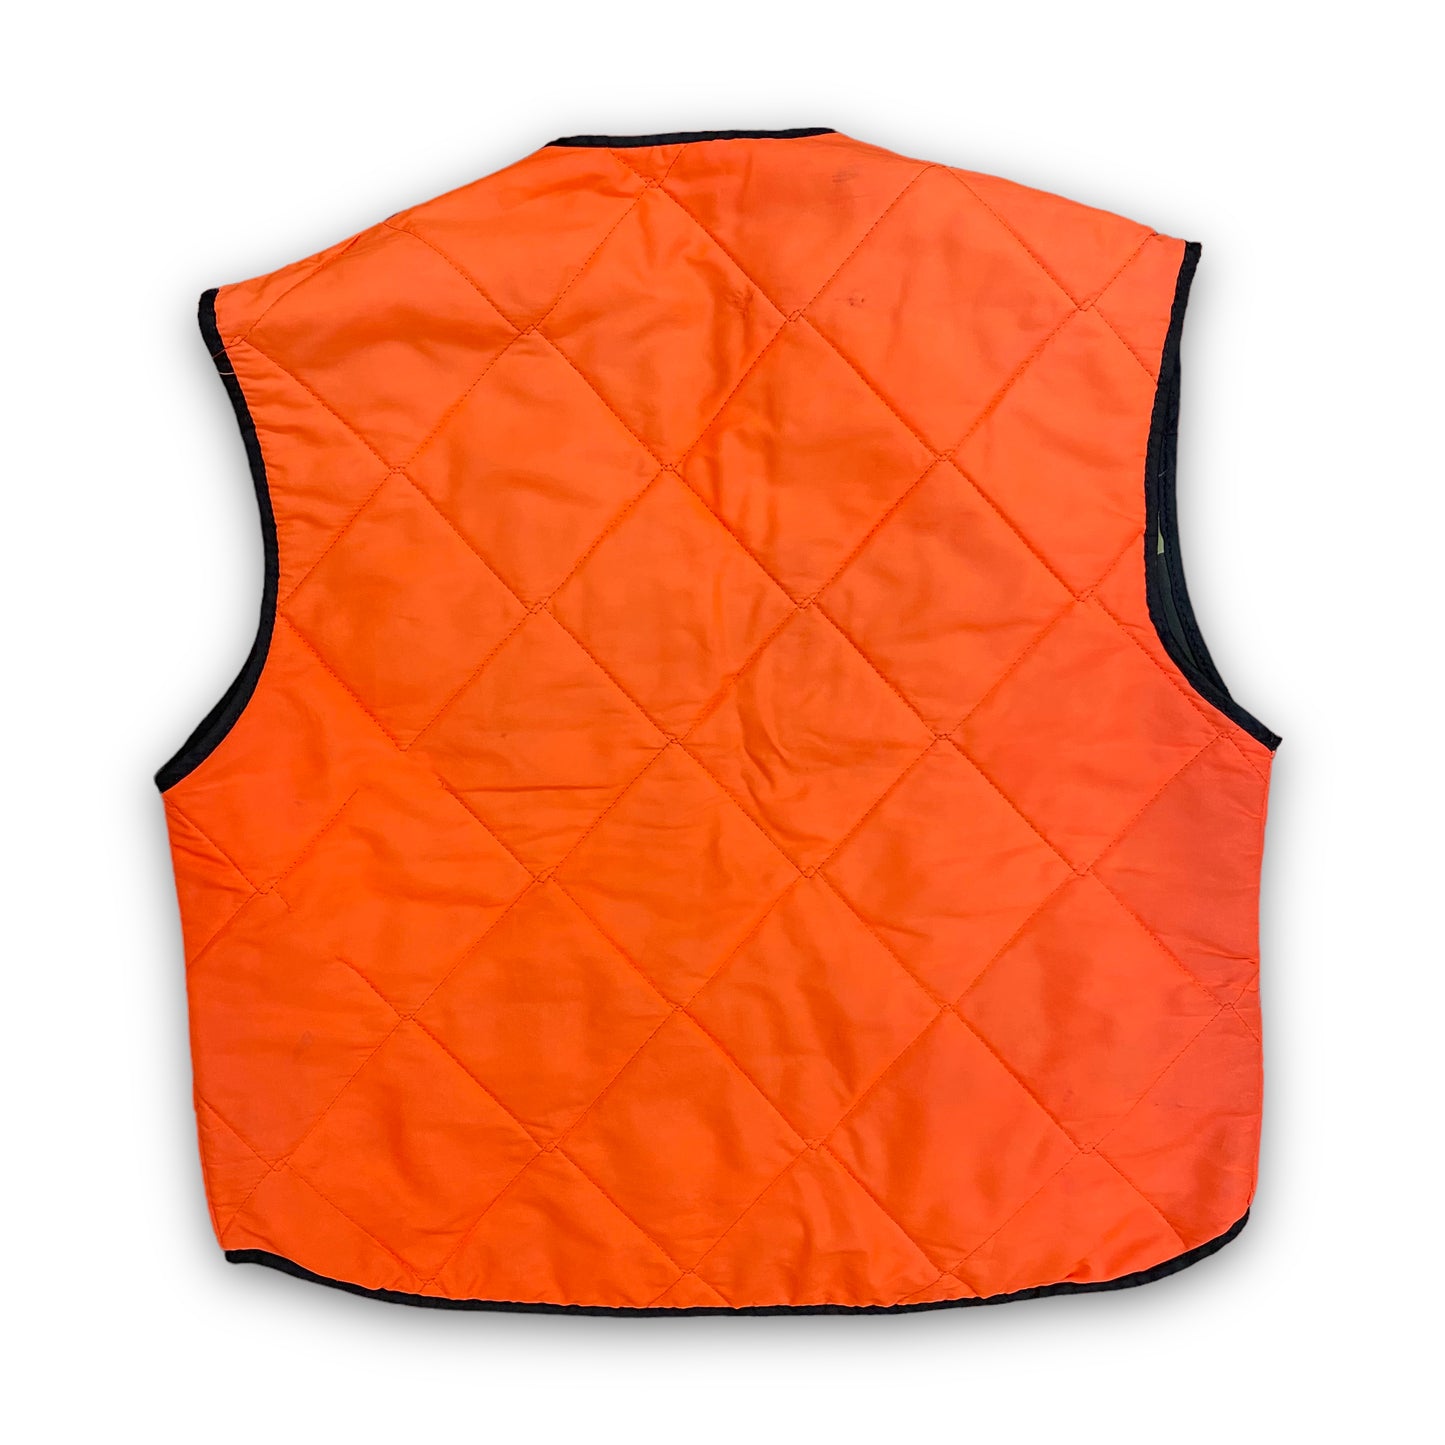 1980s Camouflage/Blaze Orange Reversible Vest - Size XL